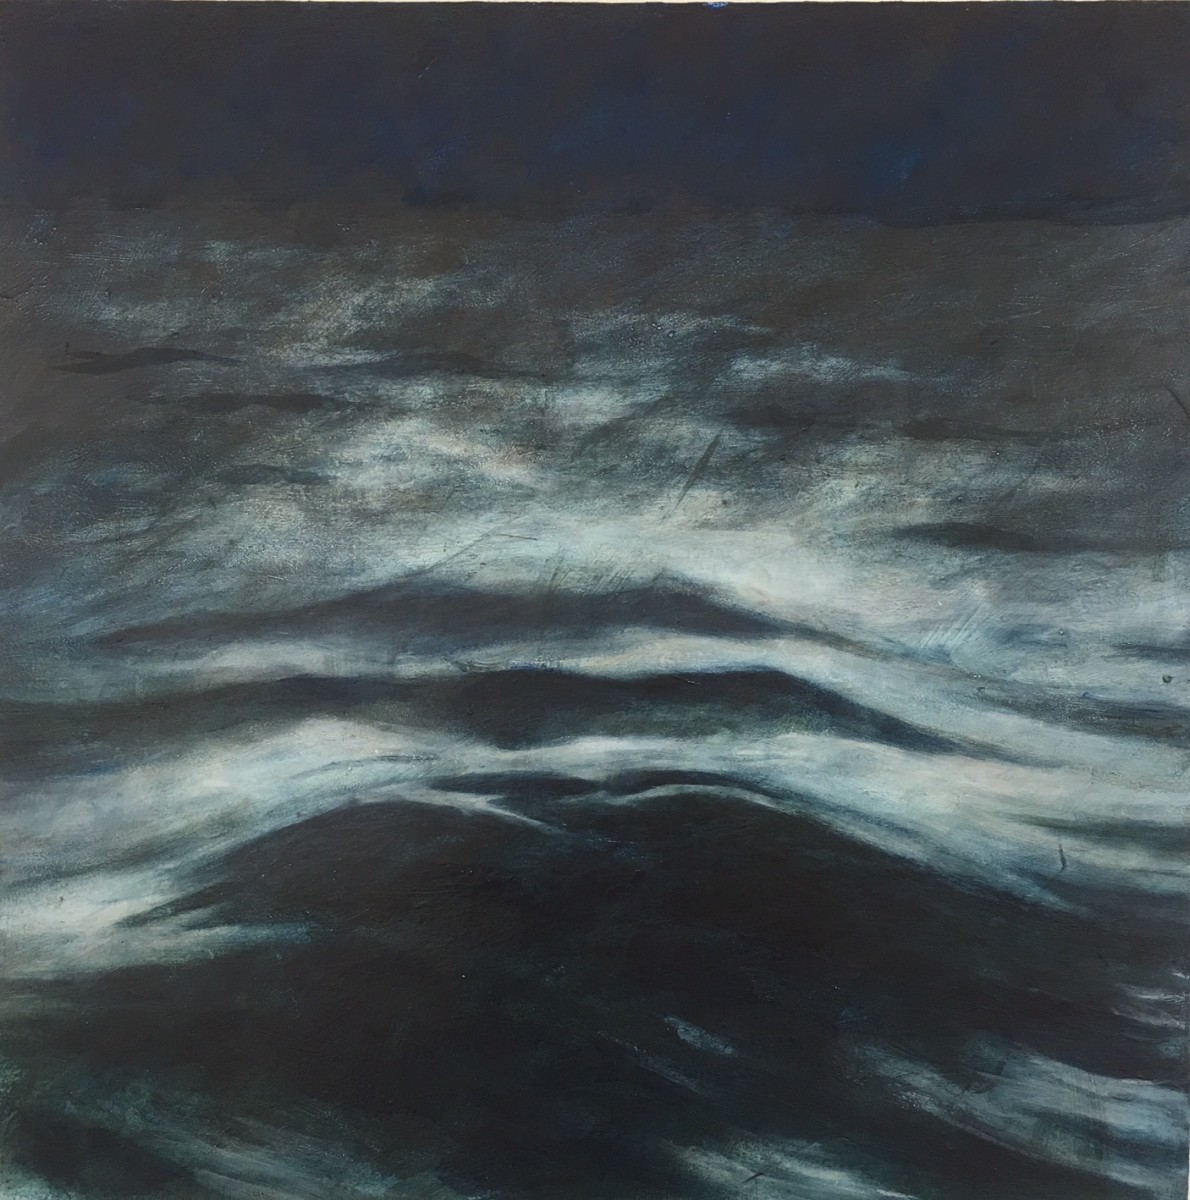 Sea Sky Series: What Lies Beneath by Krista Machovina 